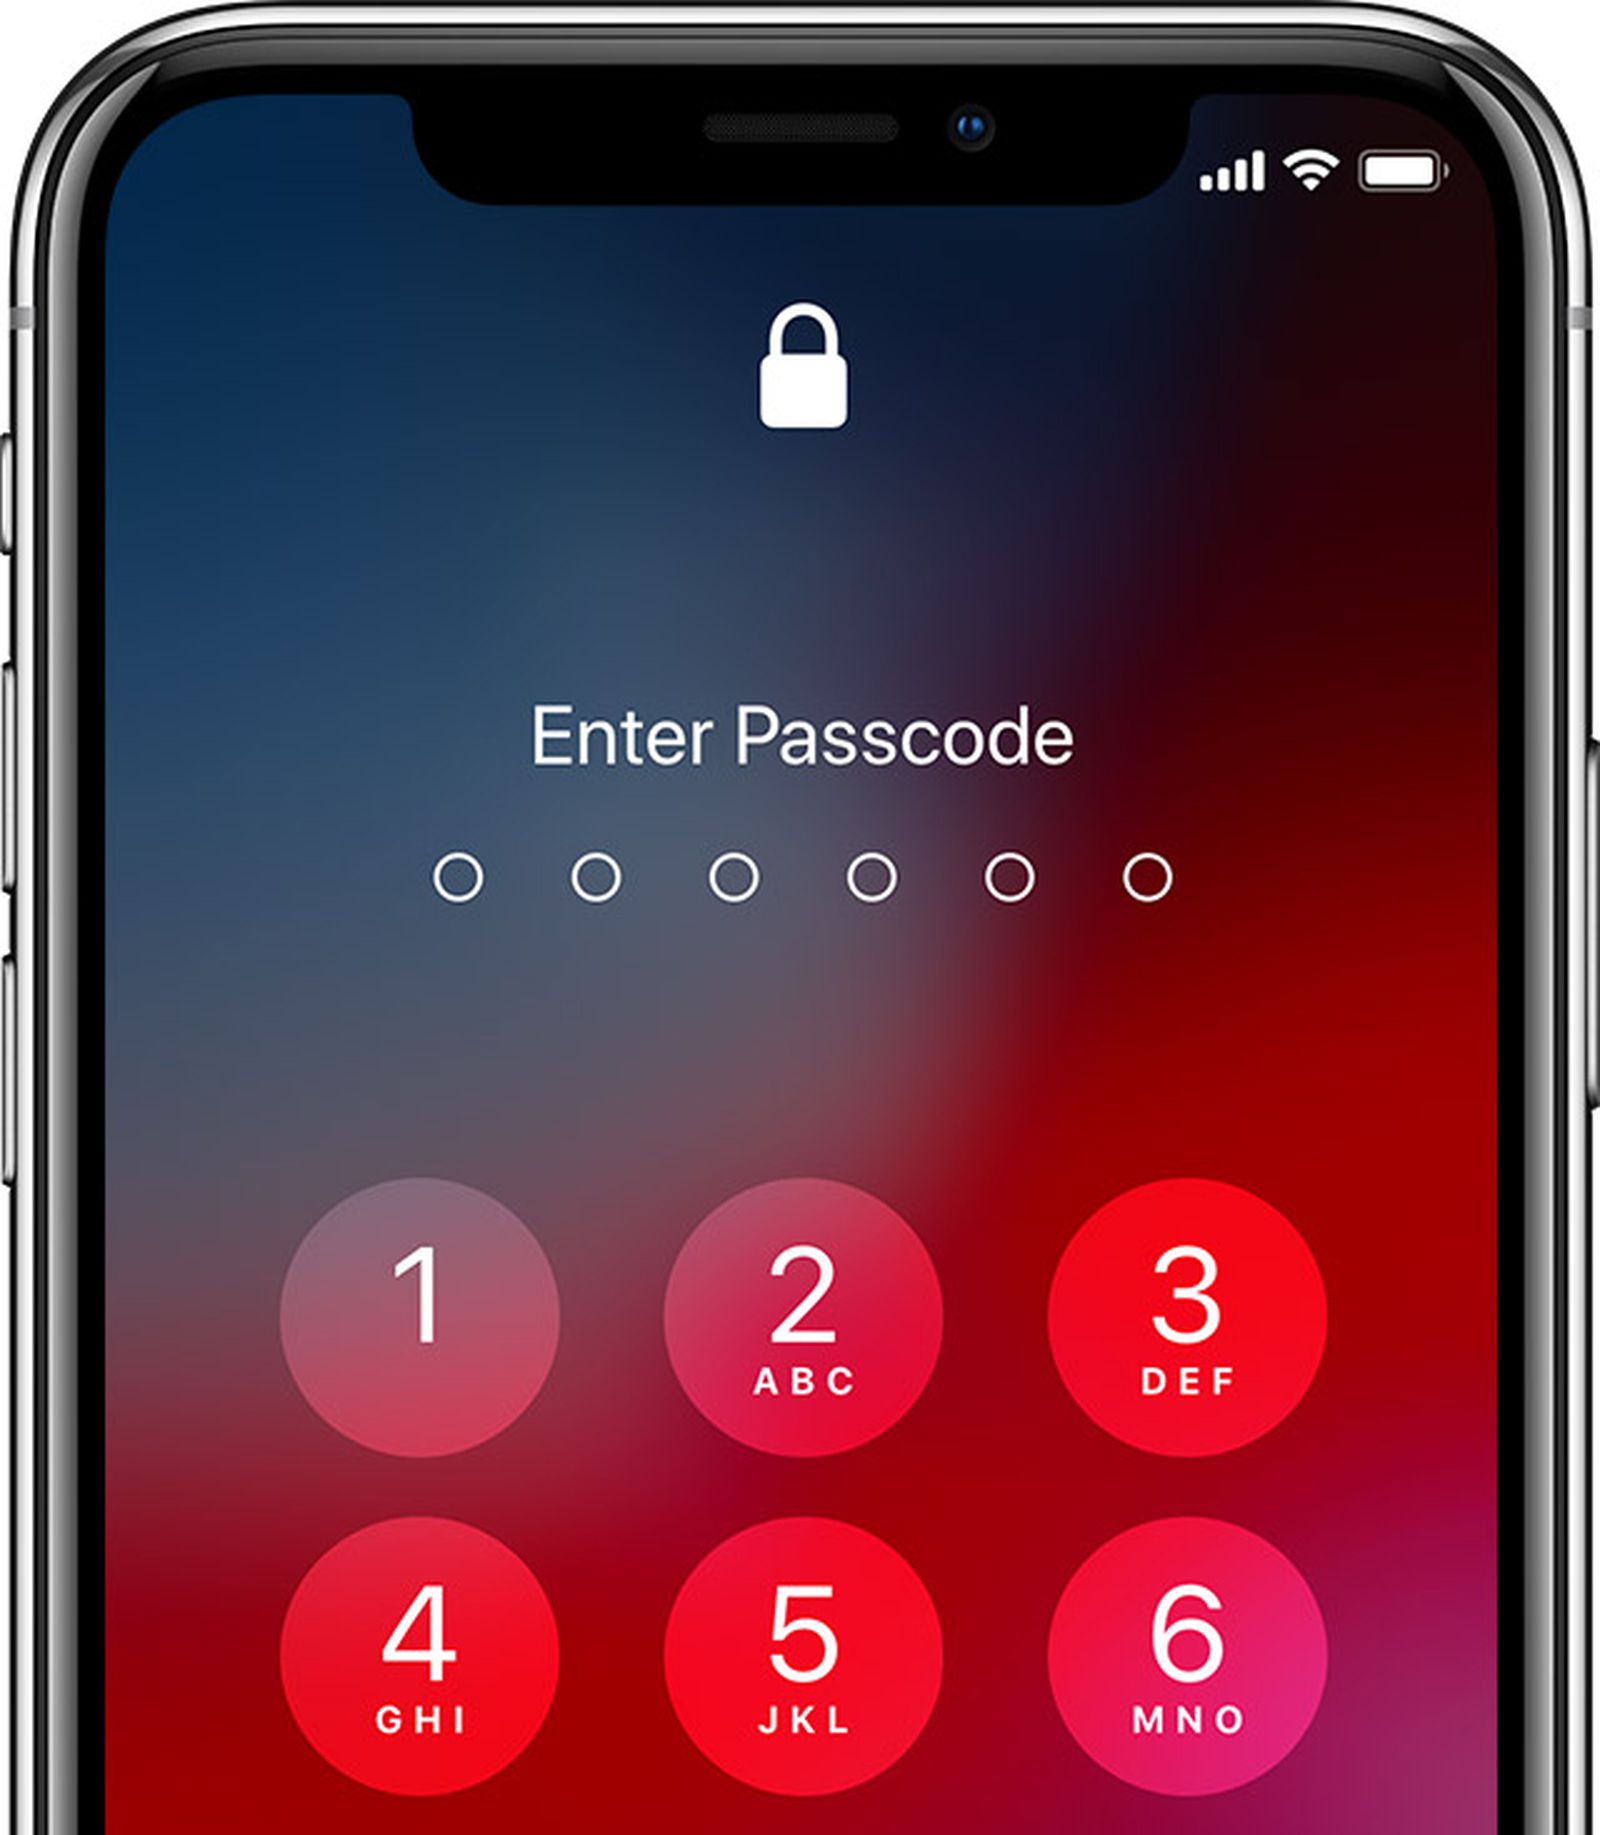 FBI Reportedly Asks Apple to Help Unlock PasscodeProtected iPhones